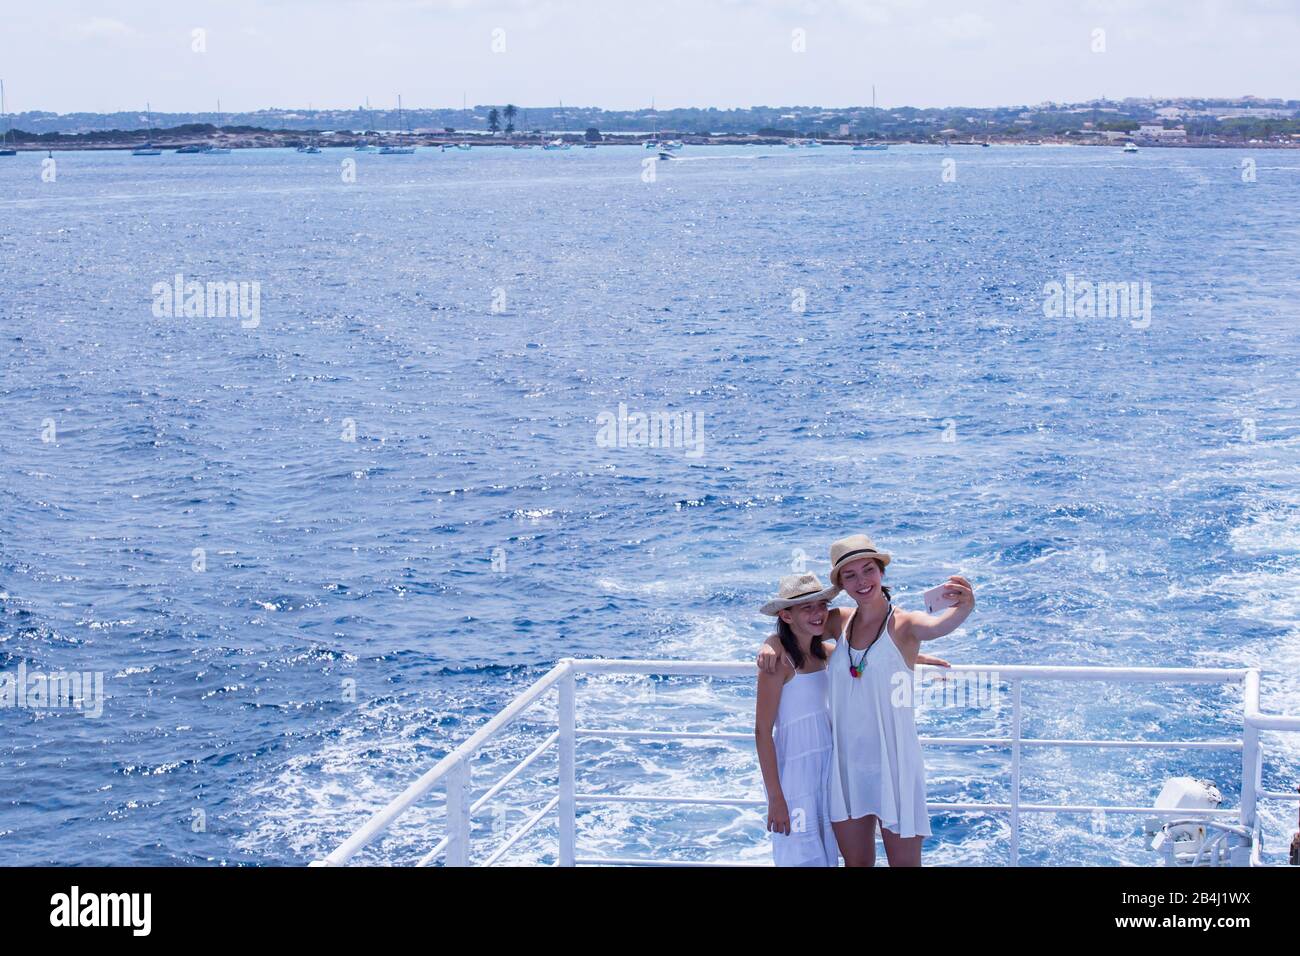 Sea, selfie, sisters, ferry Stock Photo